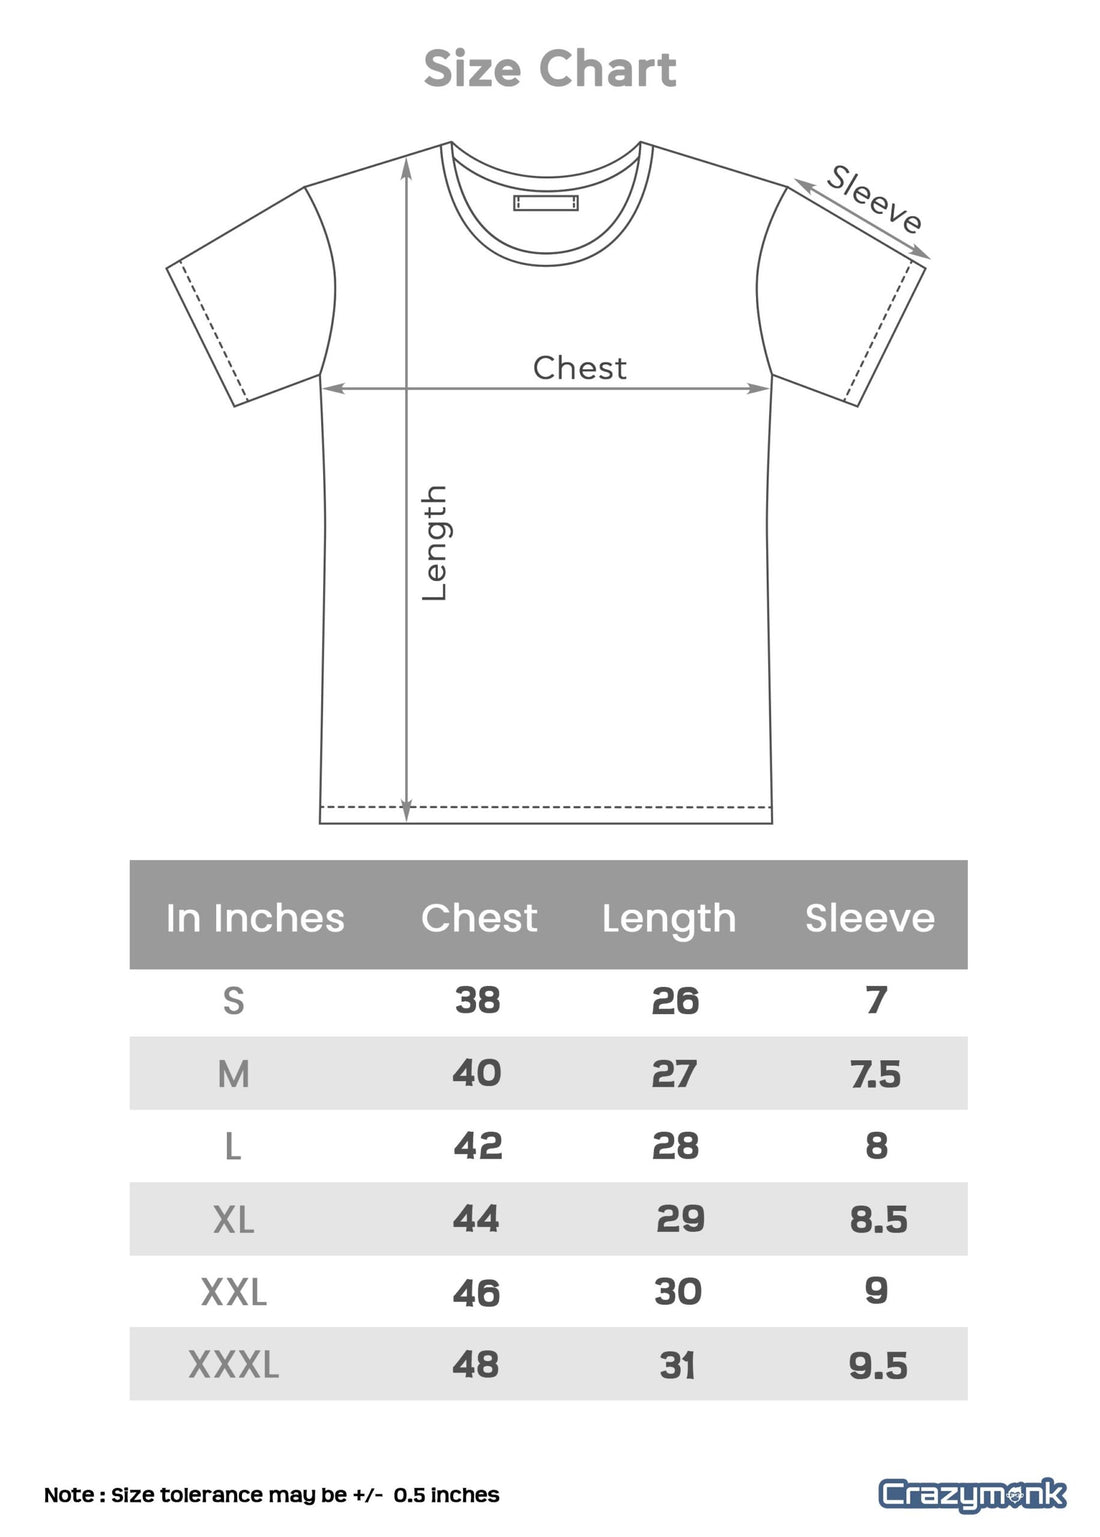 Automate & Chill Unisex T-Shirt